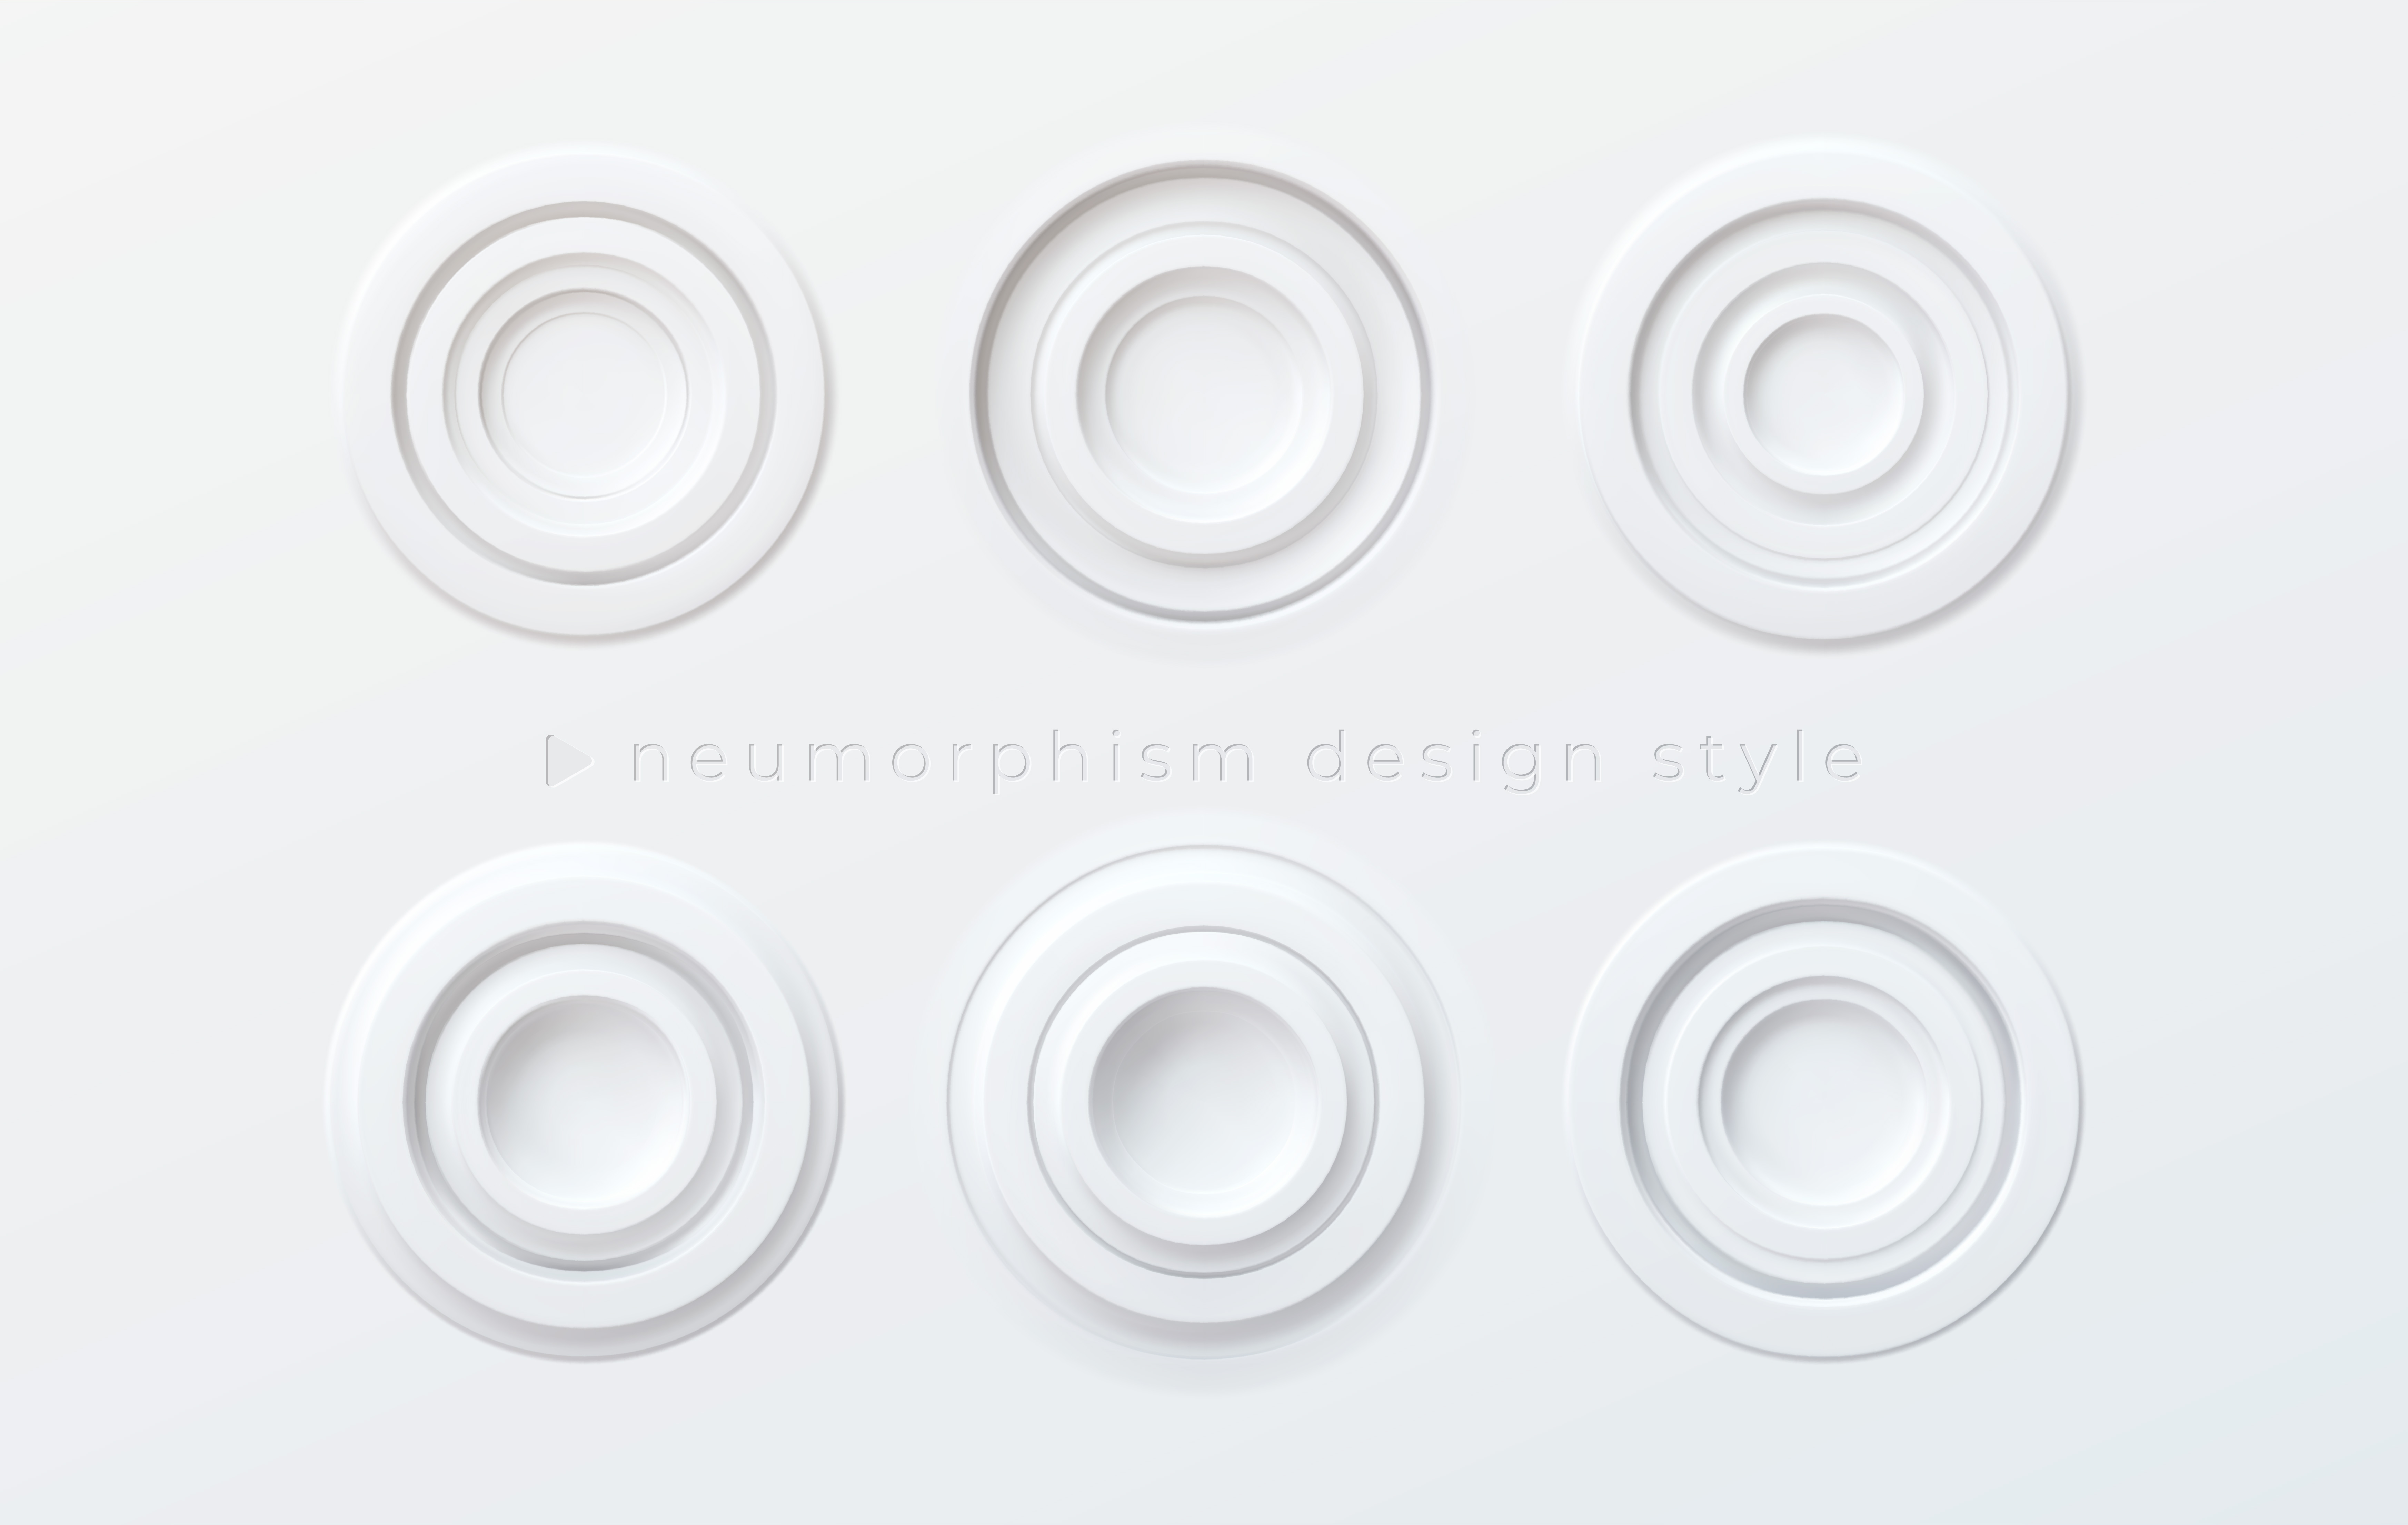 Neumorphism in Product Design